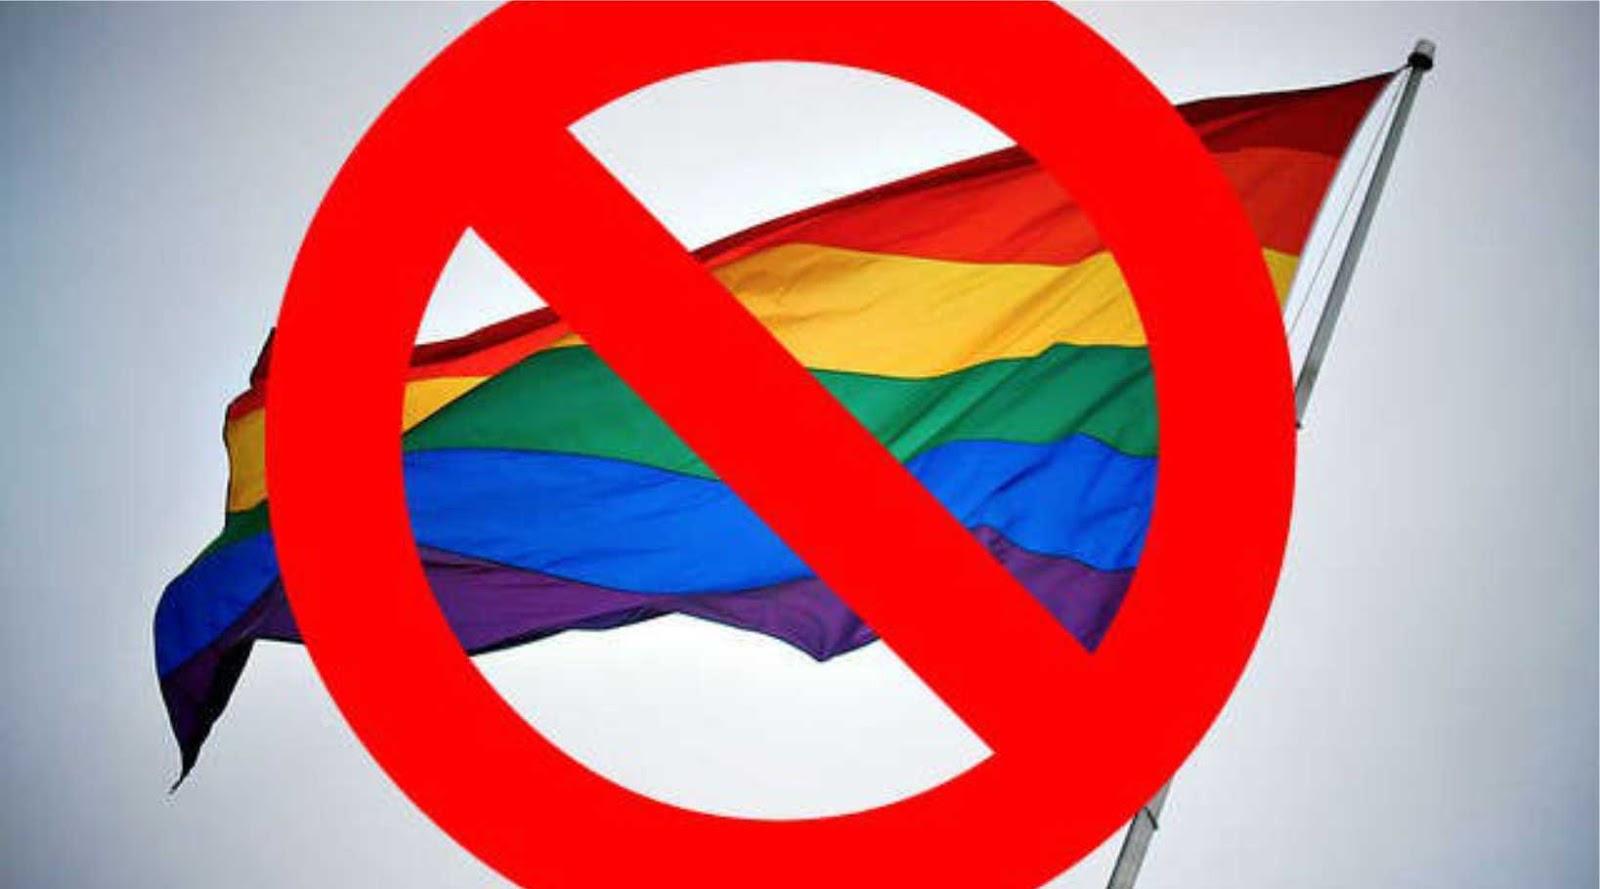 Besok, Umat Islam Bogor Turun ke Jalan Tolak LGBT